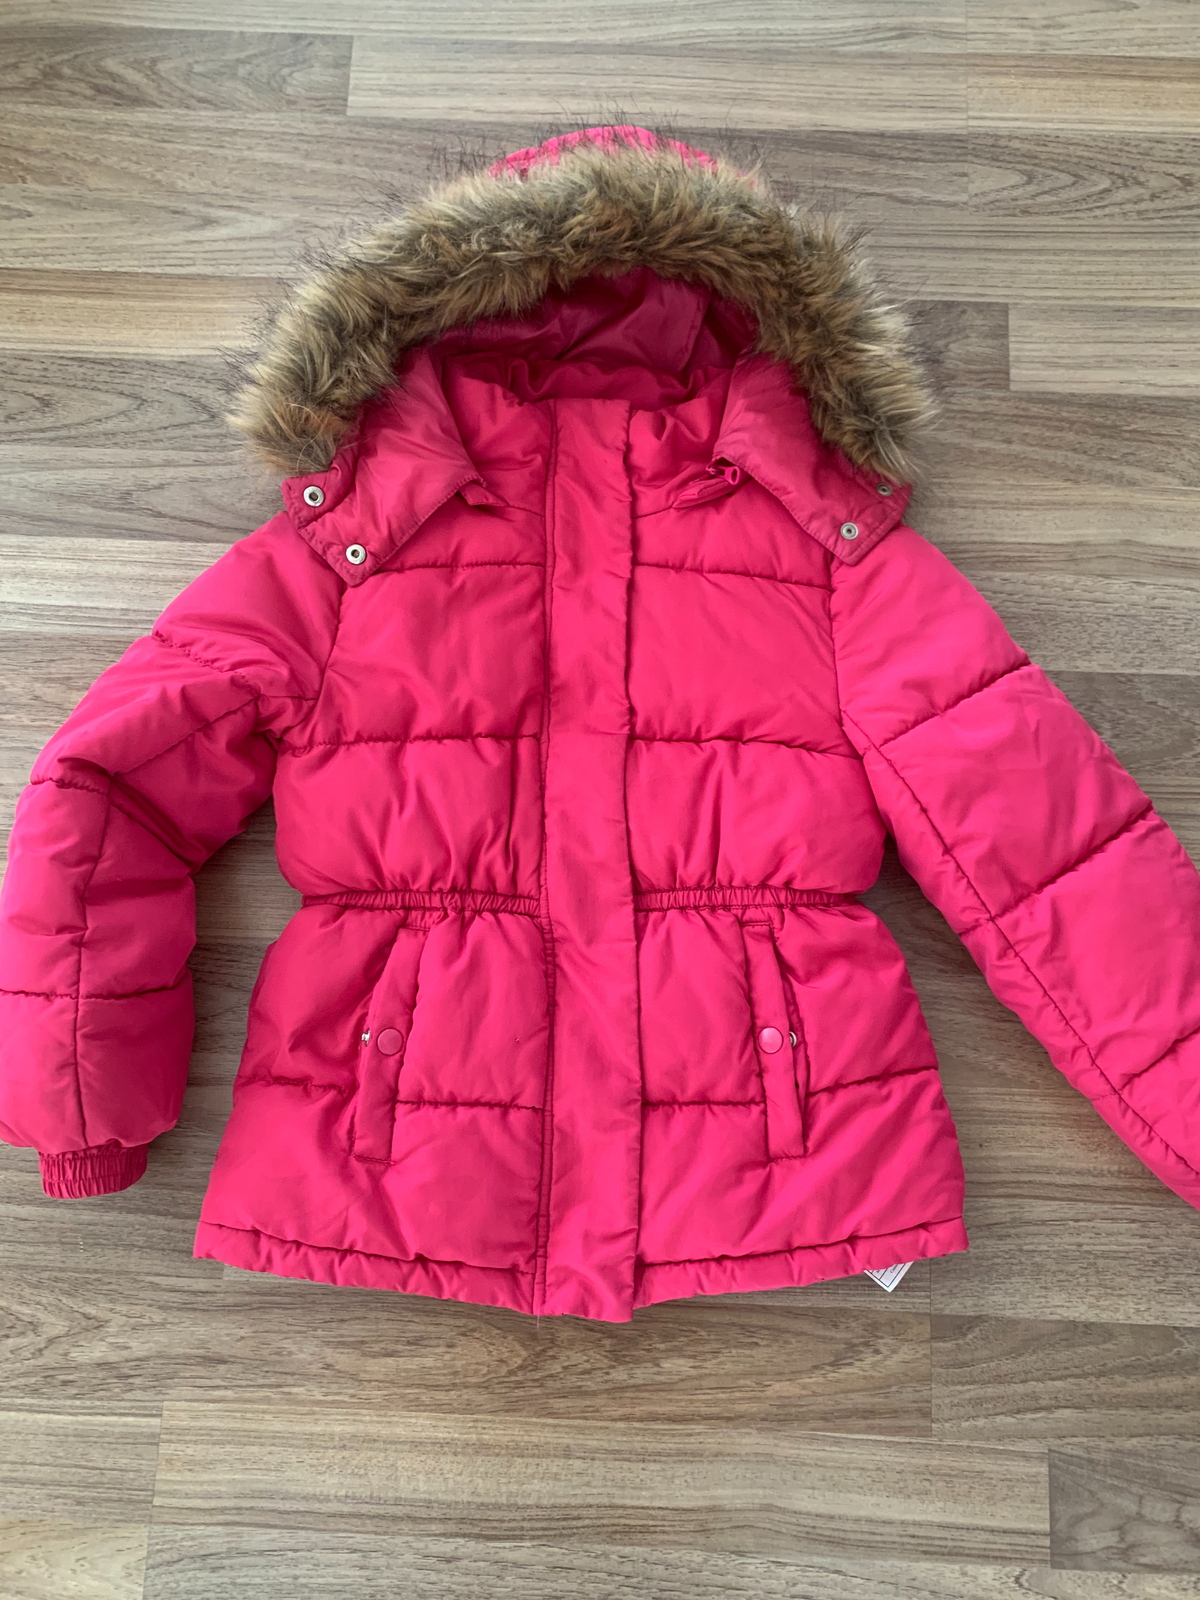 Winter Coat (Girls Size 7-8)